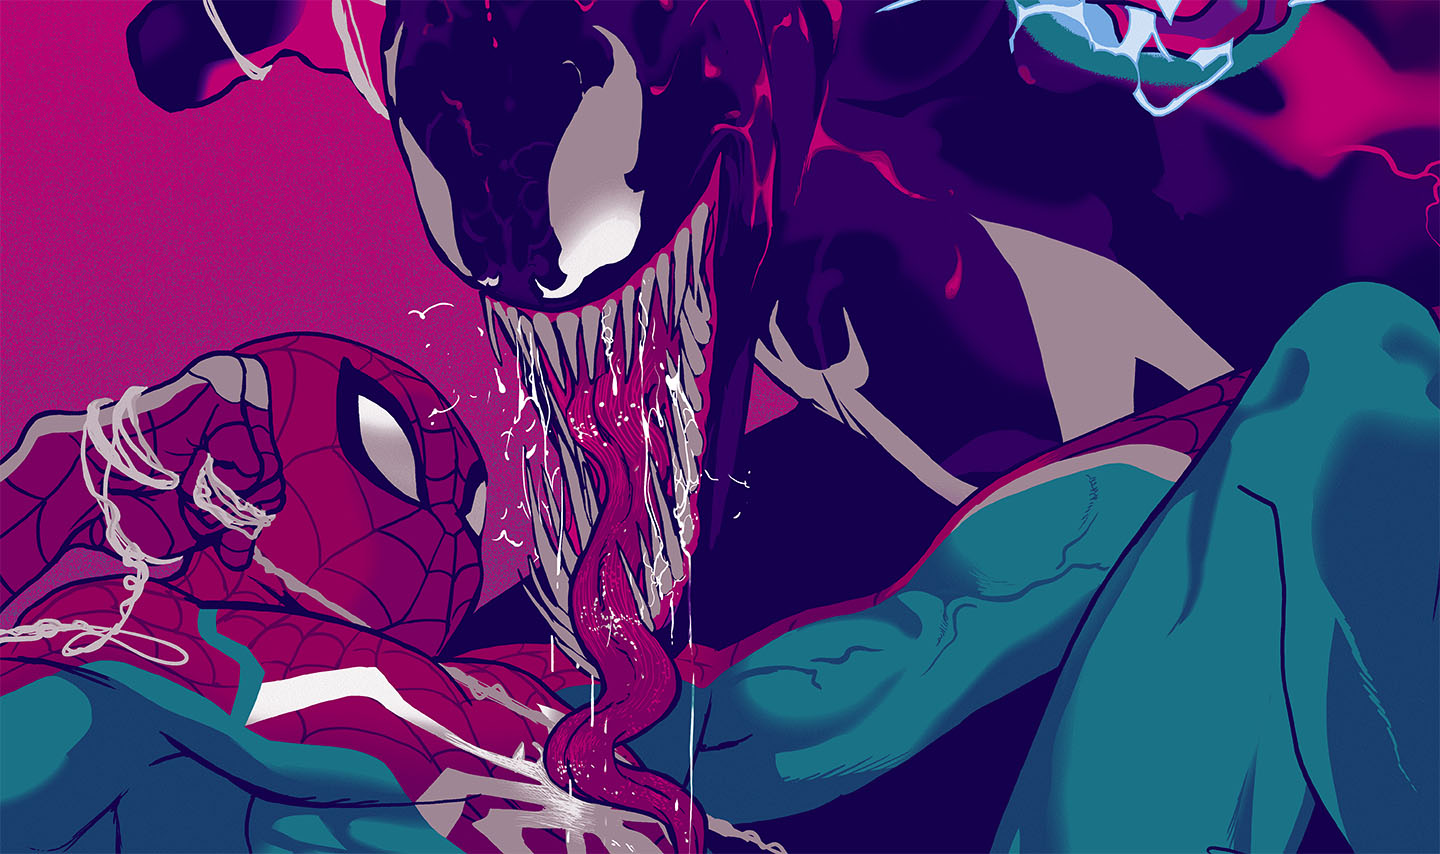 Marvel's Spider-Man 2: Original Video Game Soundtrack – Mondo